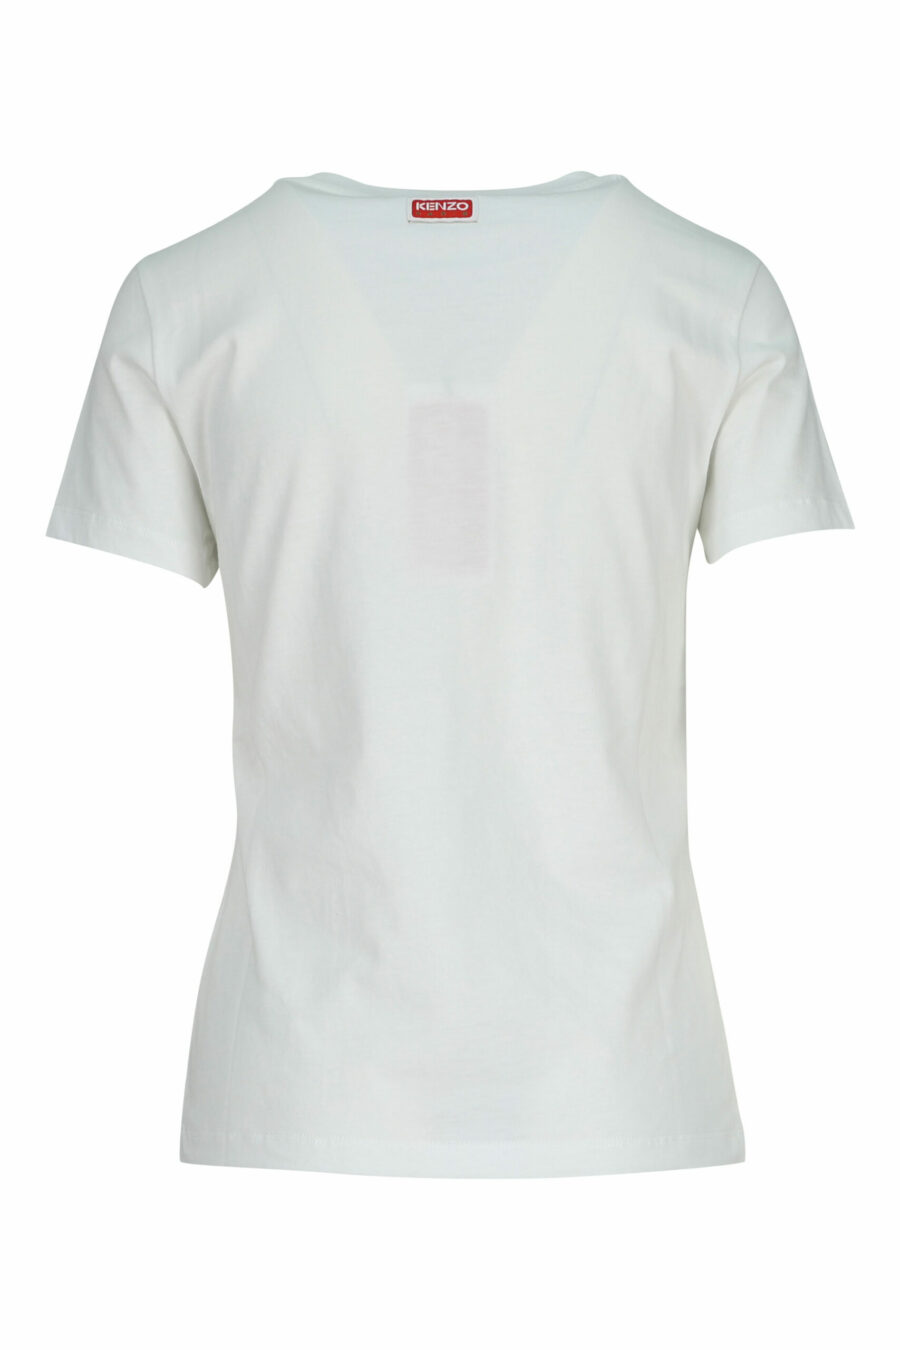 Camiseta blanca con minilogo "kenzo elephant" - 3612230620117 3 scaled